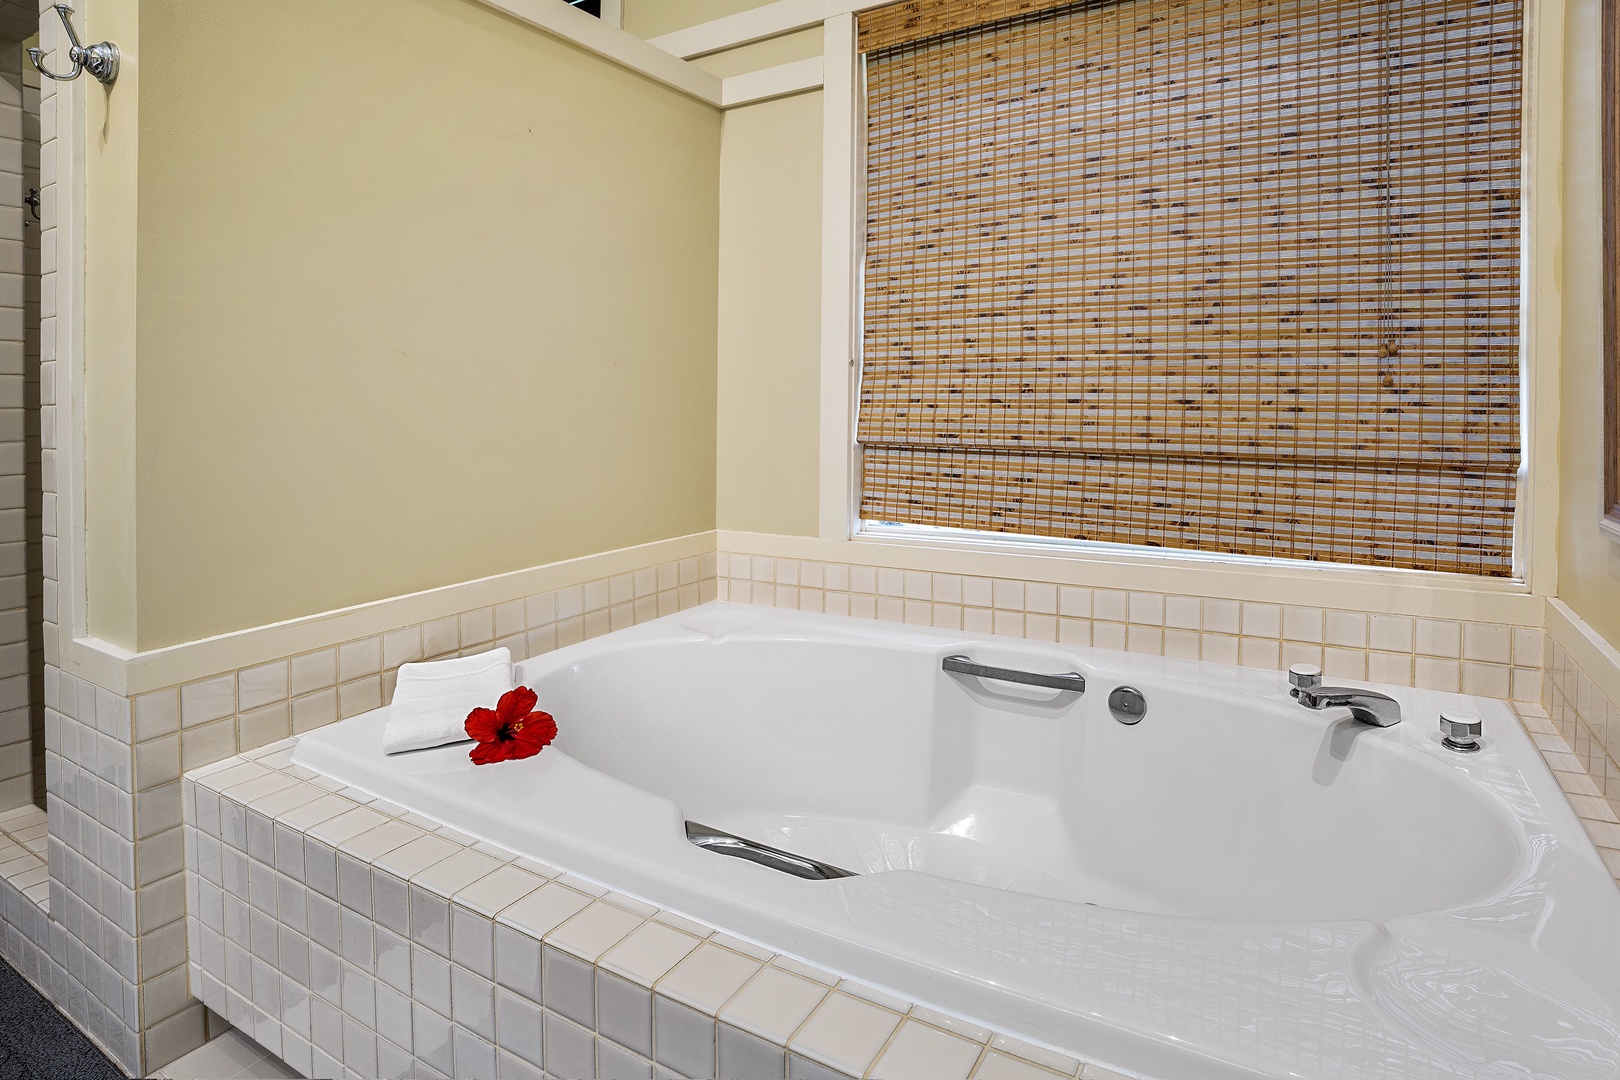 Kailua Kona Vacation Rentals, Pineapple House - Primary Bath soaking tub